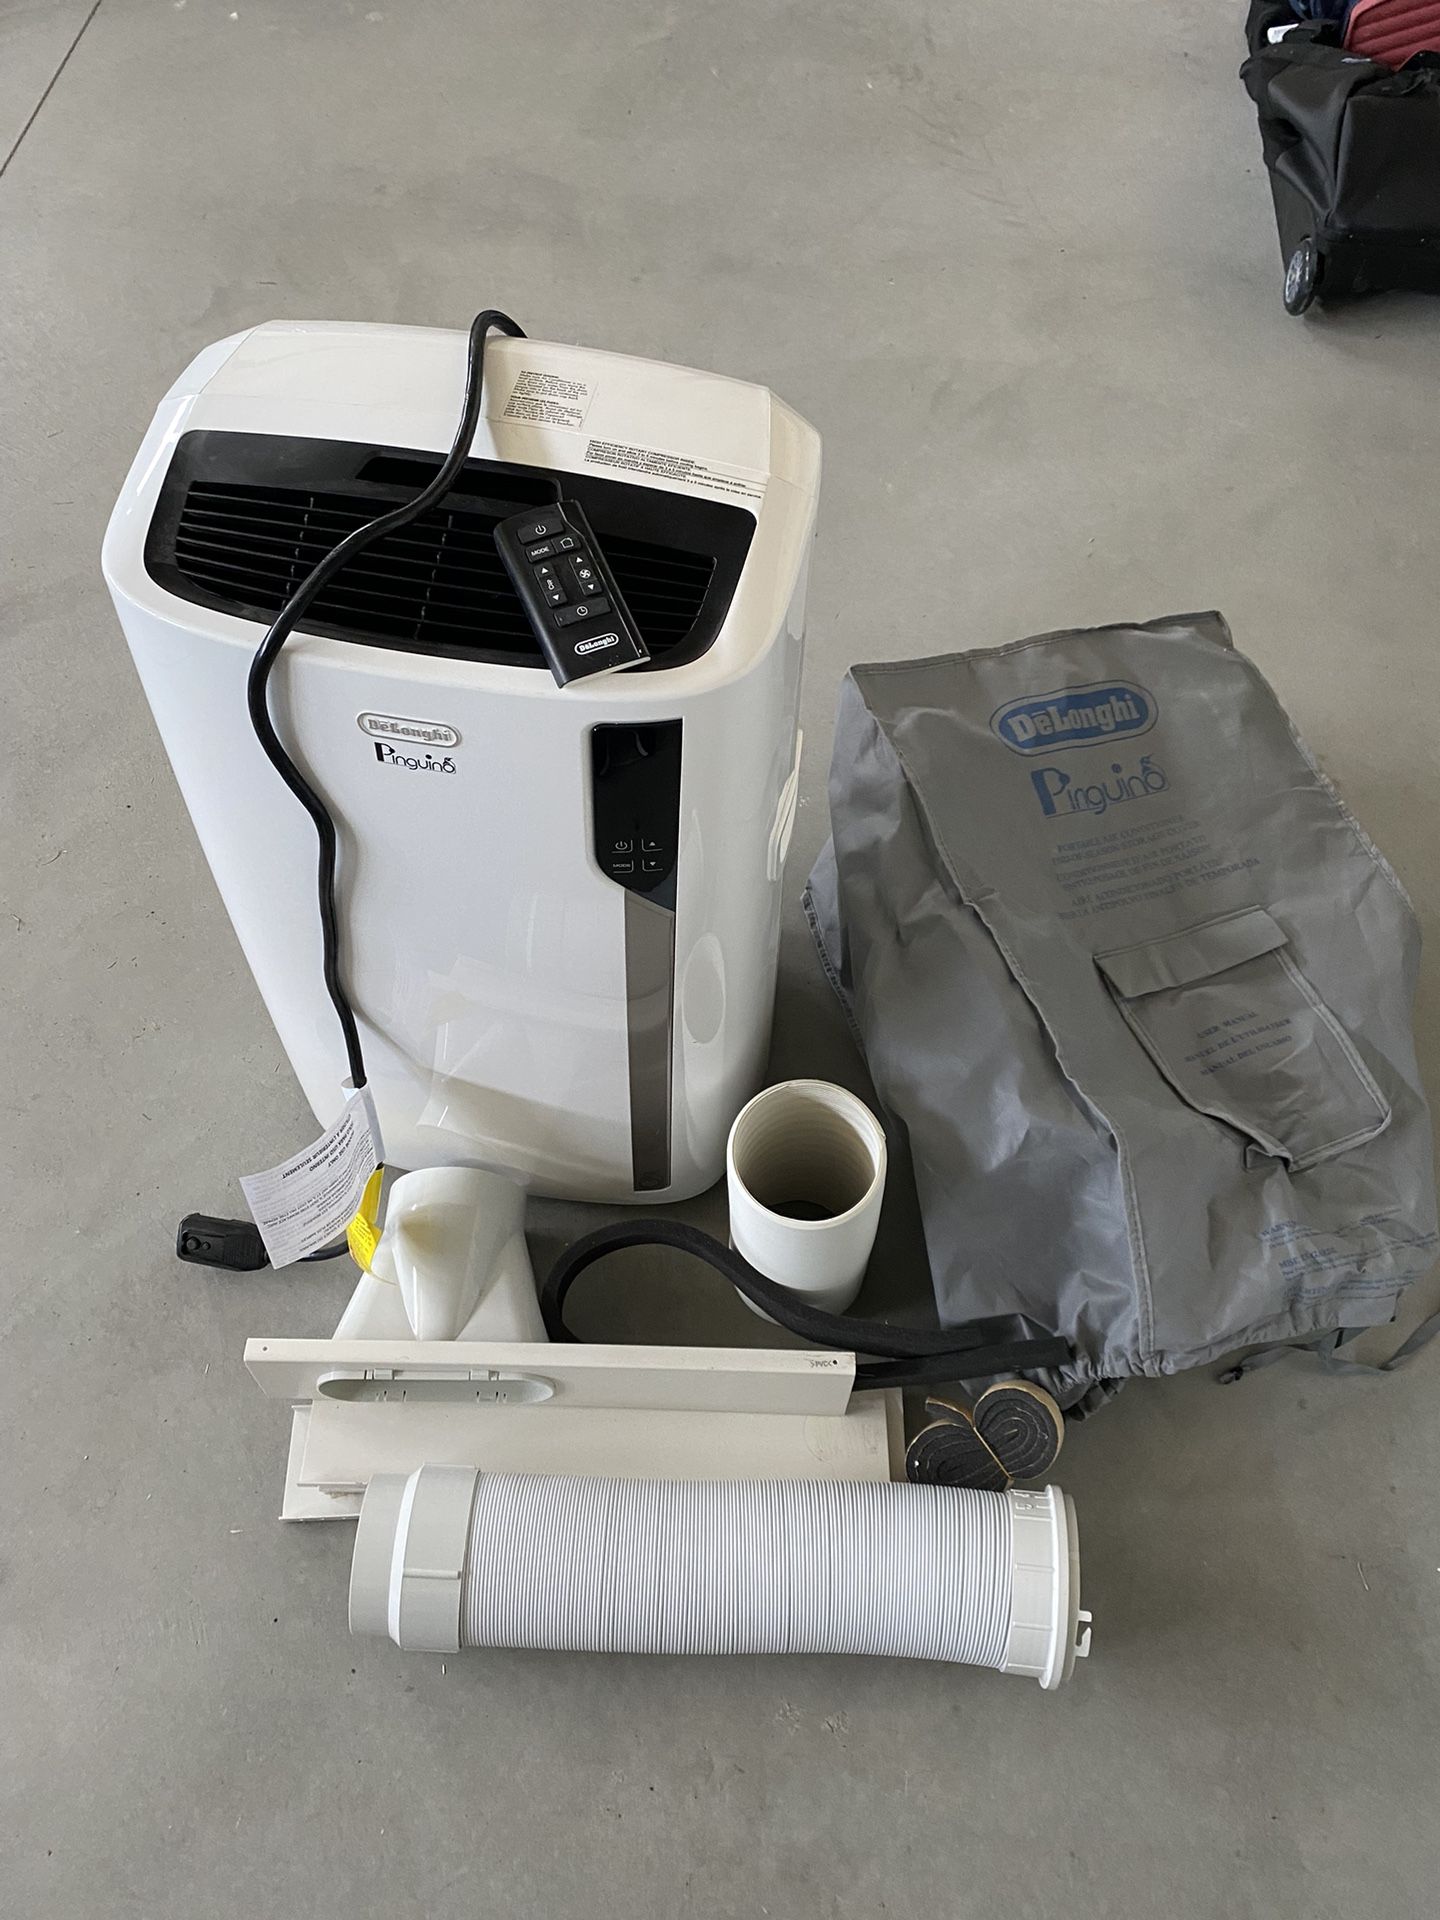 Delonghi Portable Air Conditioner With Remote 